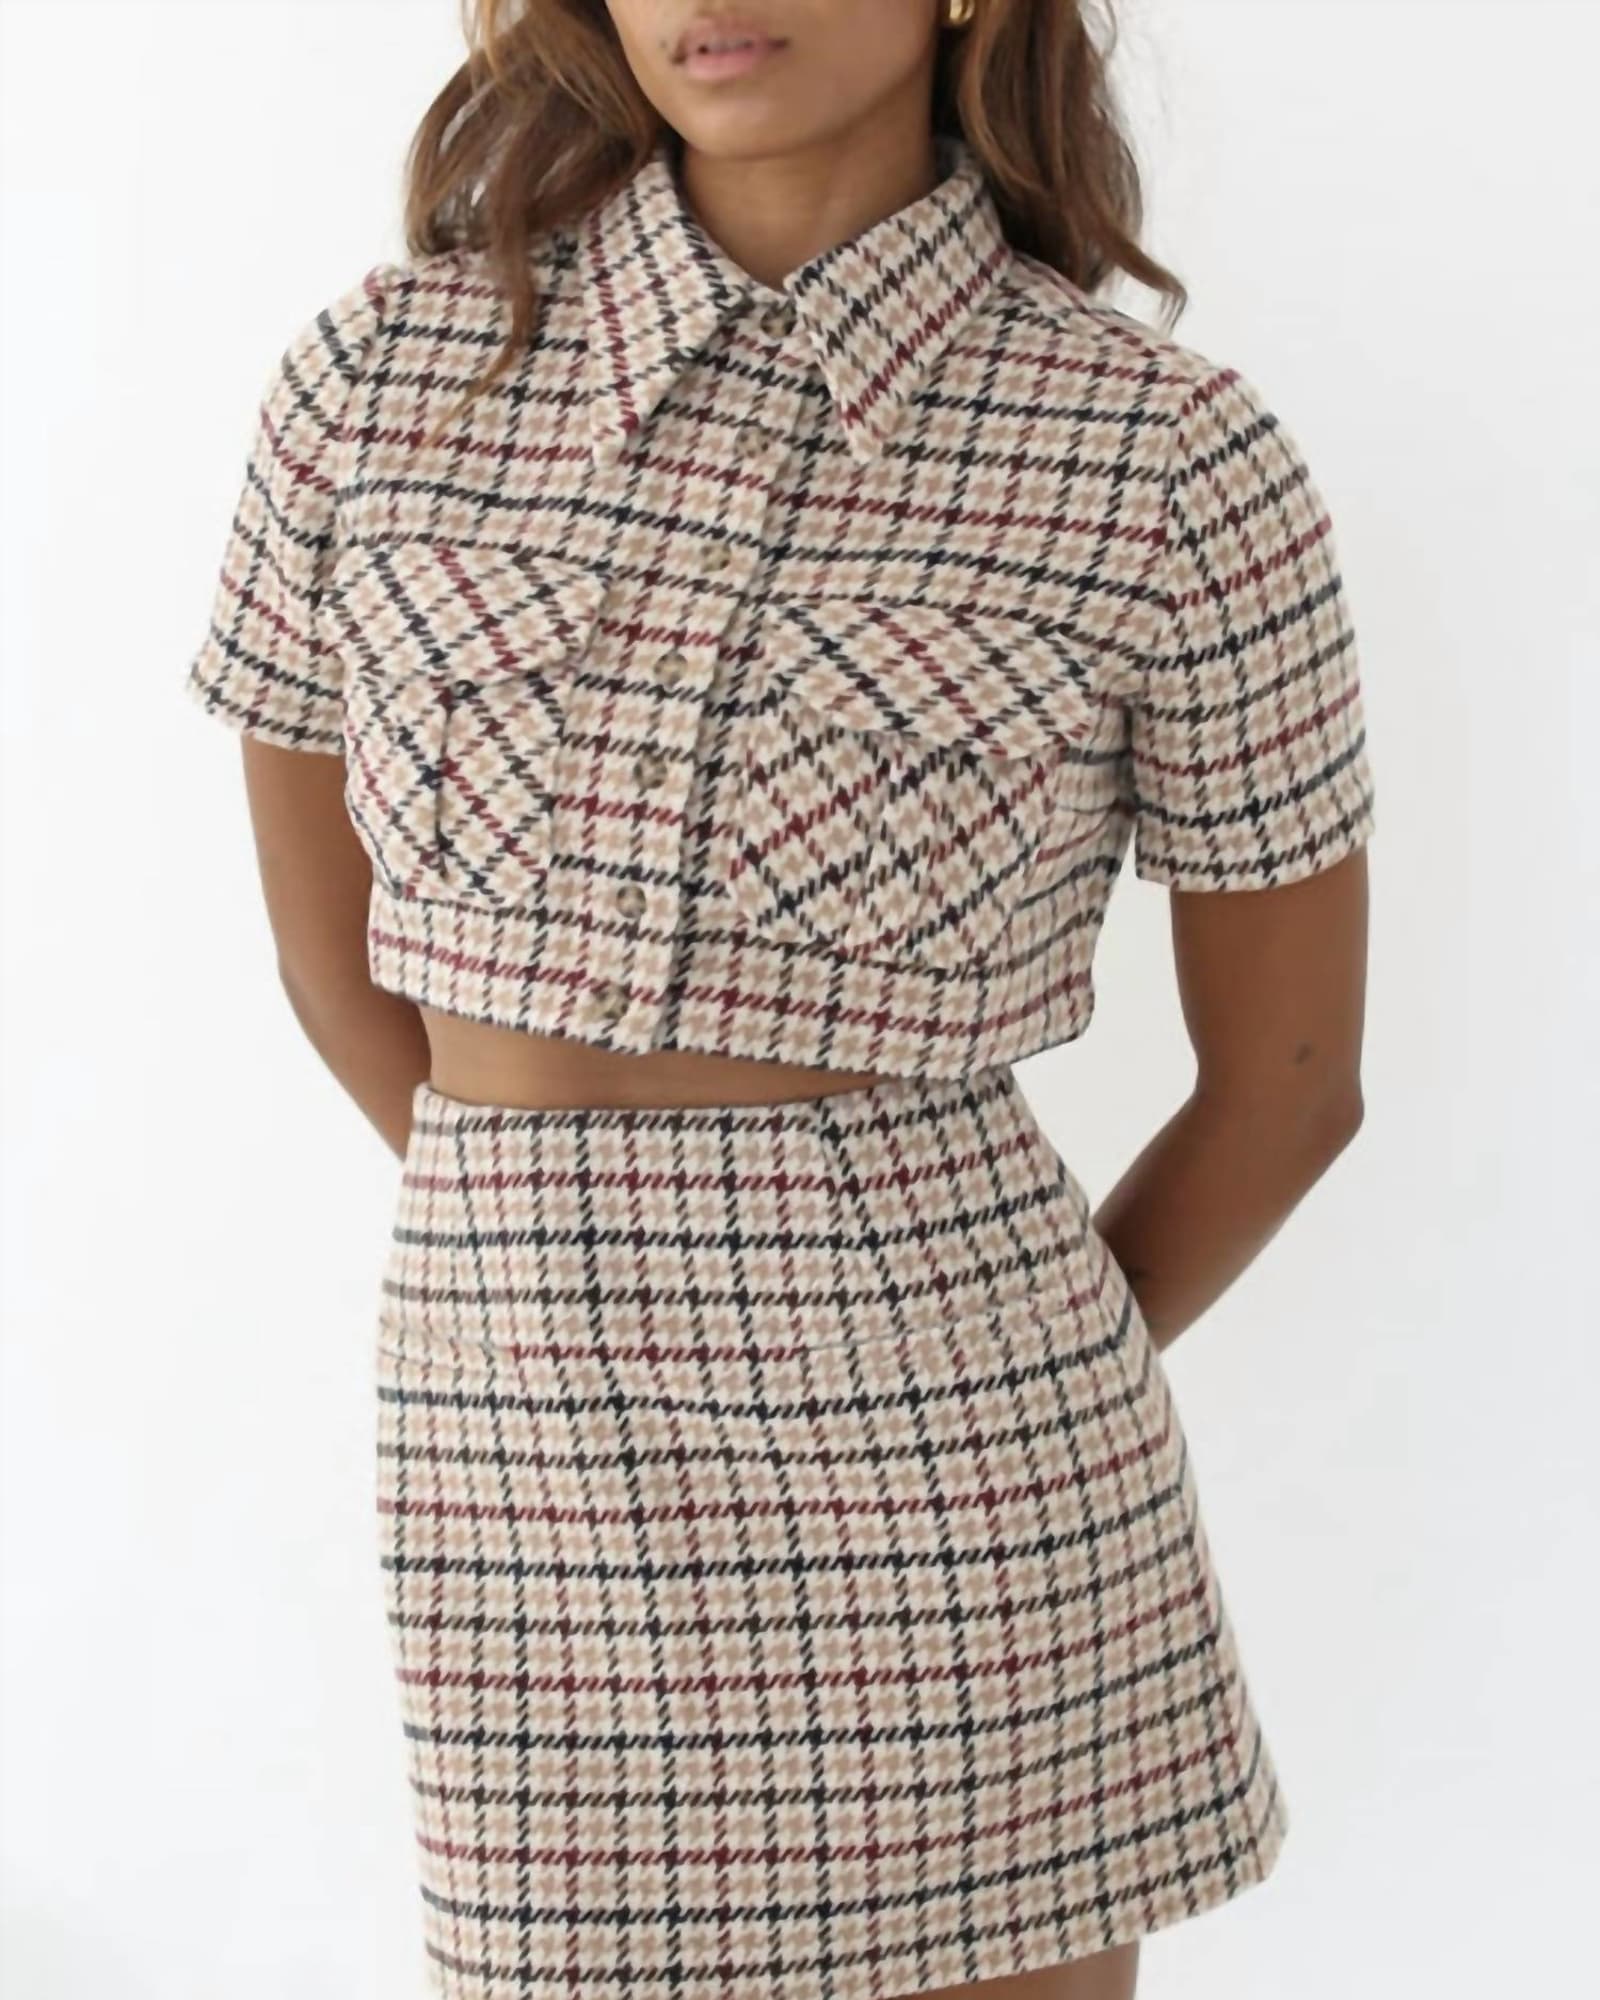 Coco Mini Skirt In Newbury Plaid Tweed | Newbury Plaid Tweed